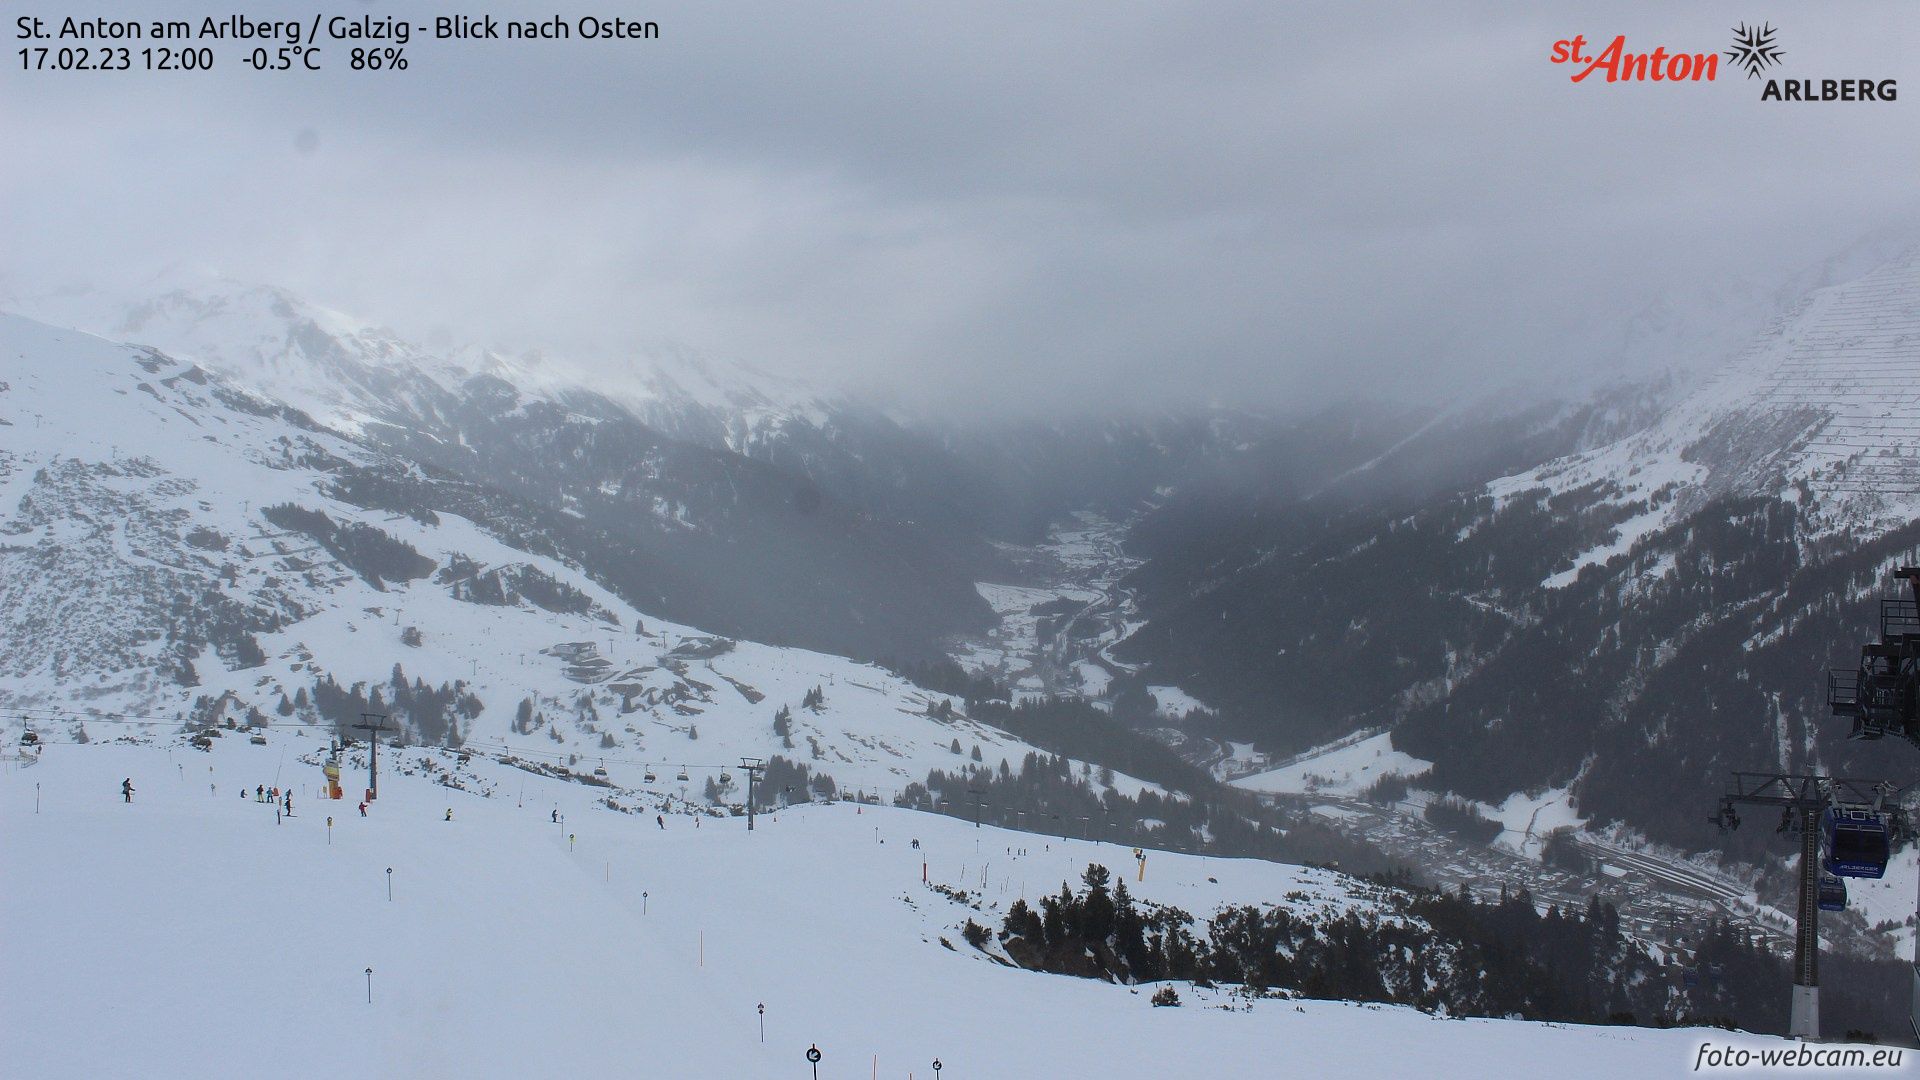 Mostly cloudy and light precipitation in St Anton am Arlberg (foto-webcam.eu)